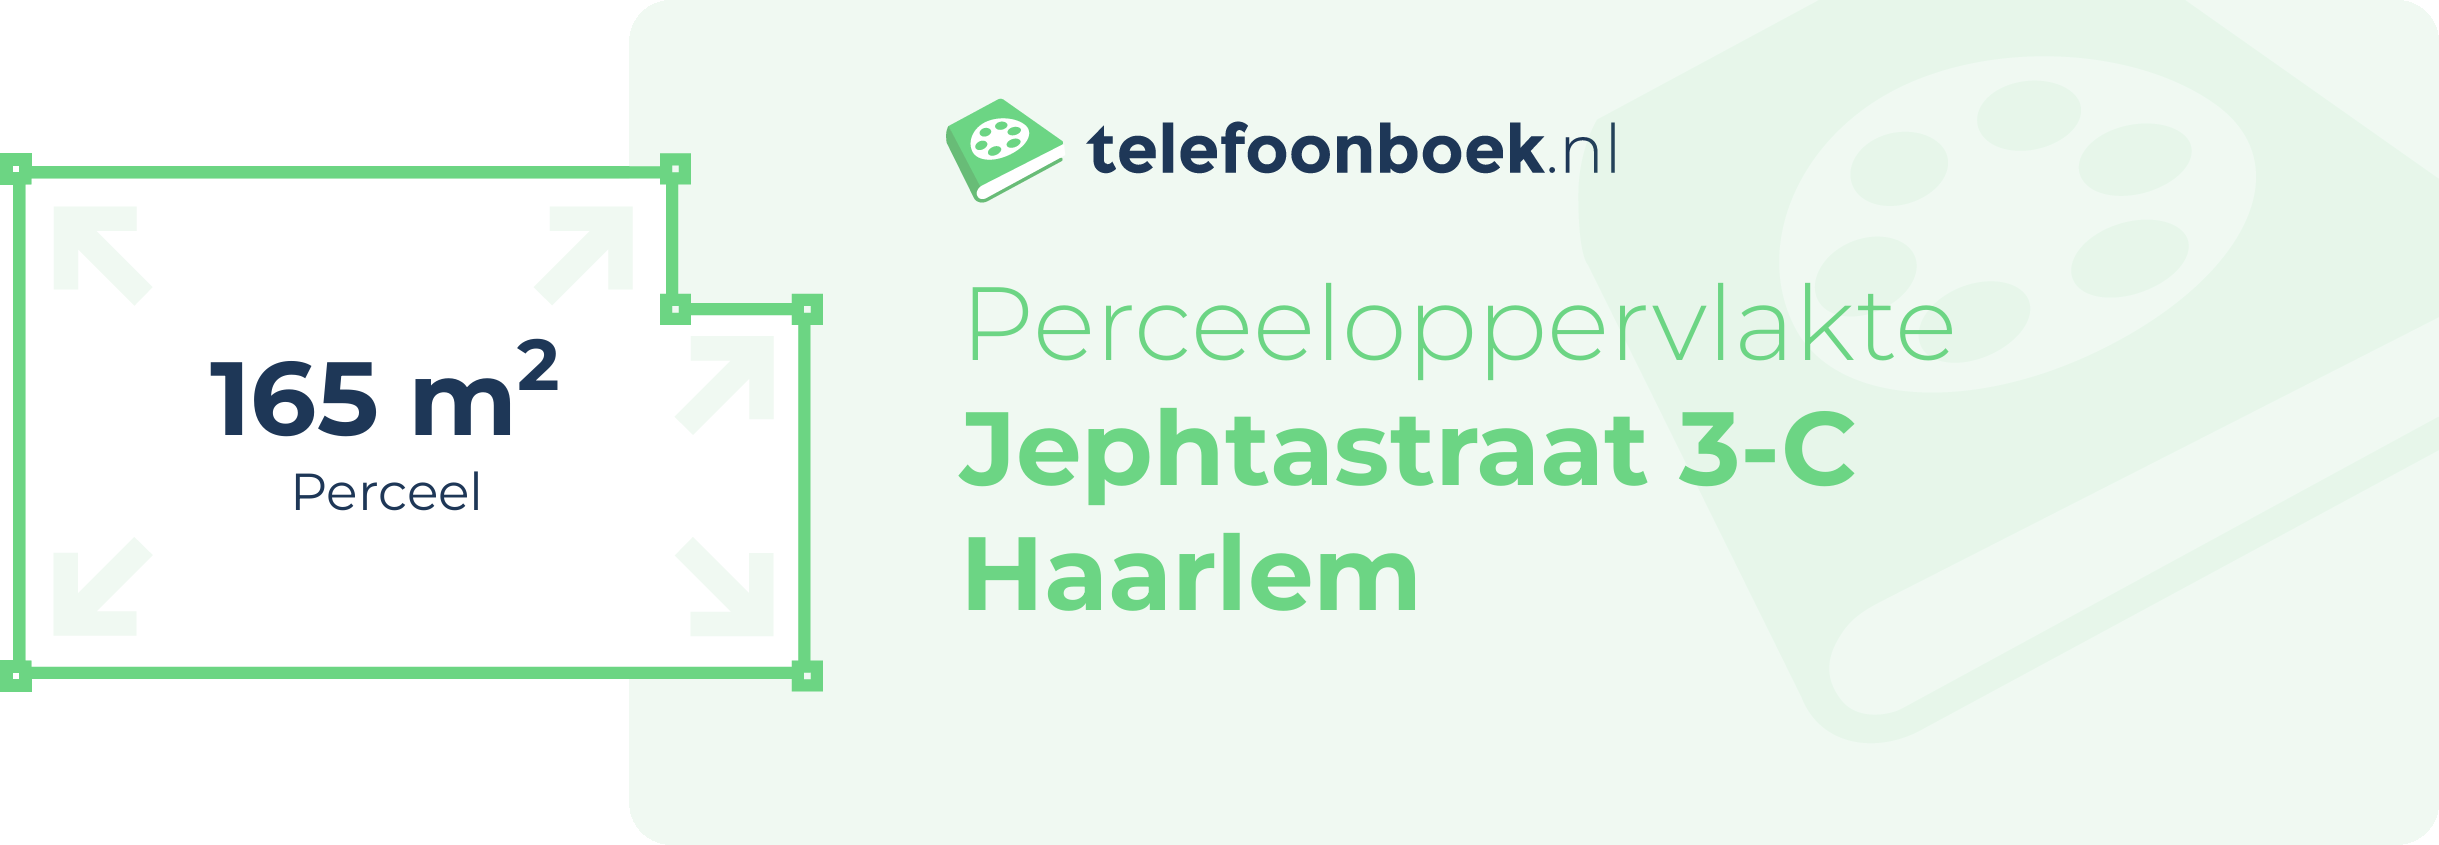 Perceeloppervlakte Jephtastraat 3-C Haarlem